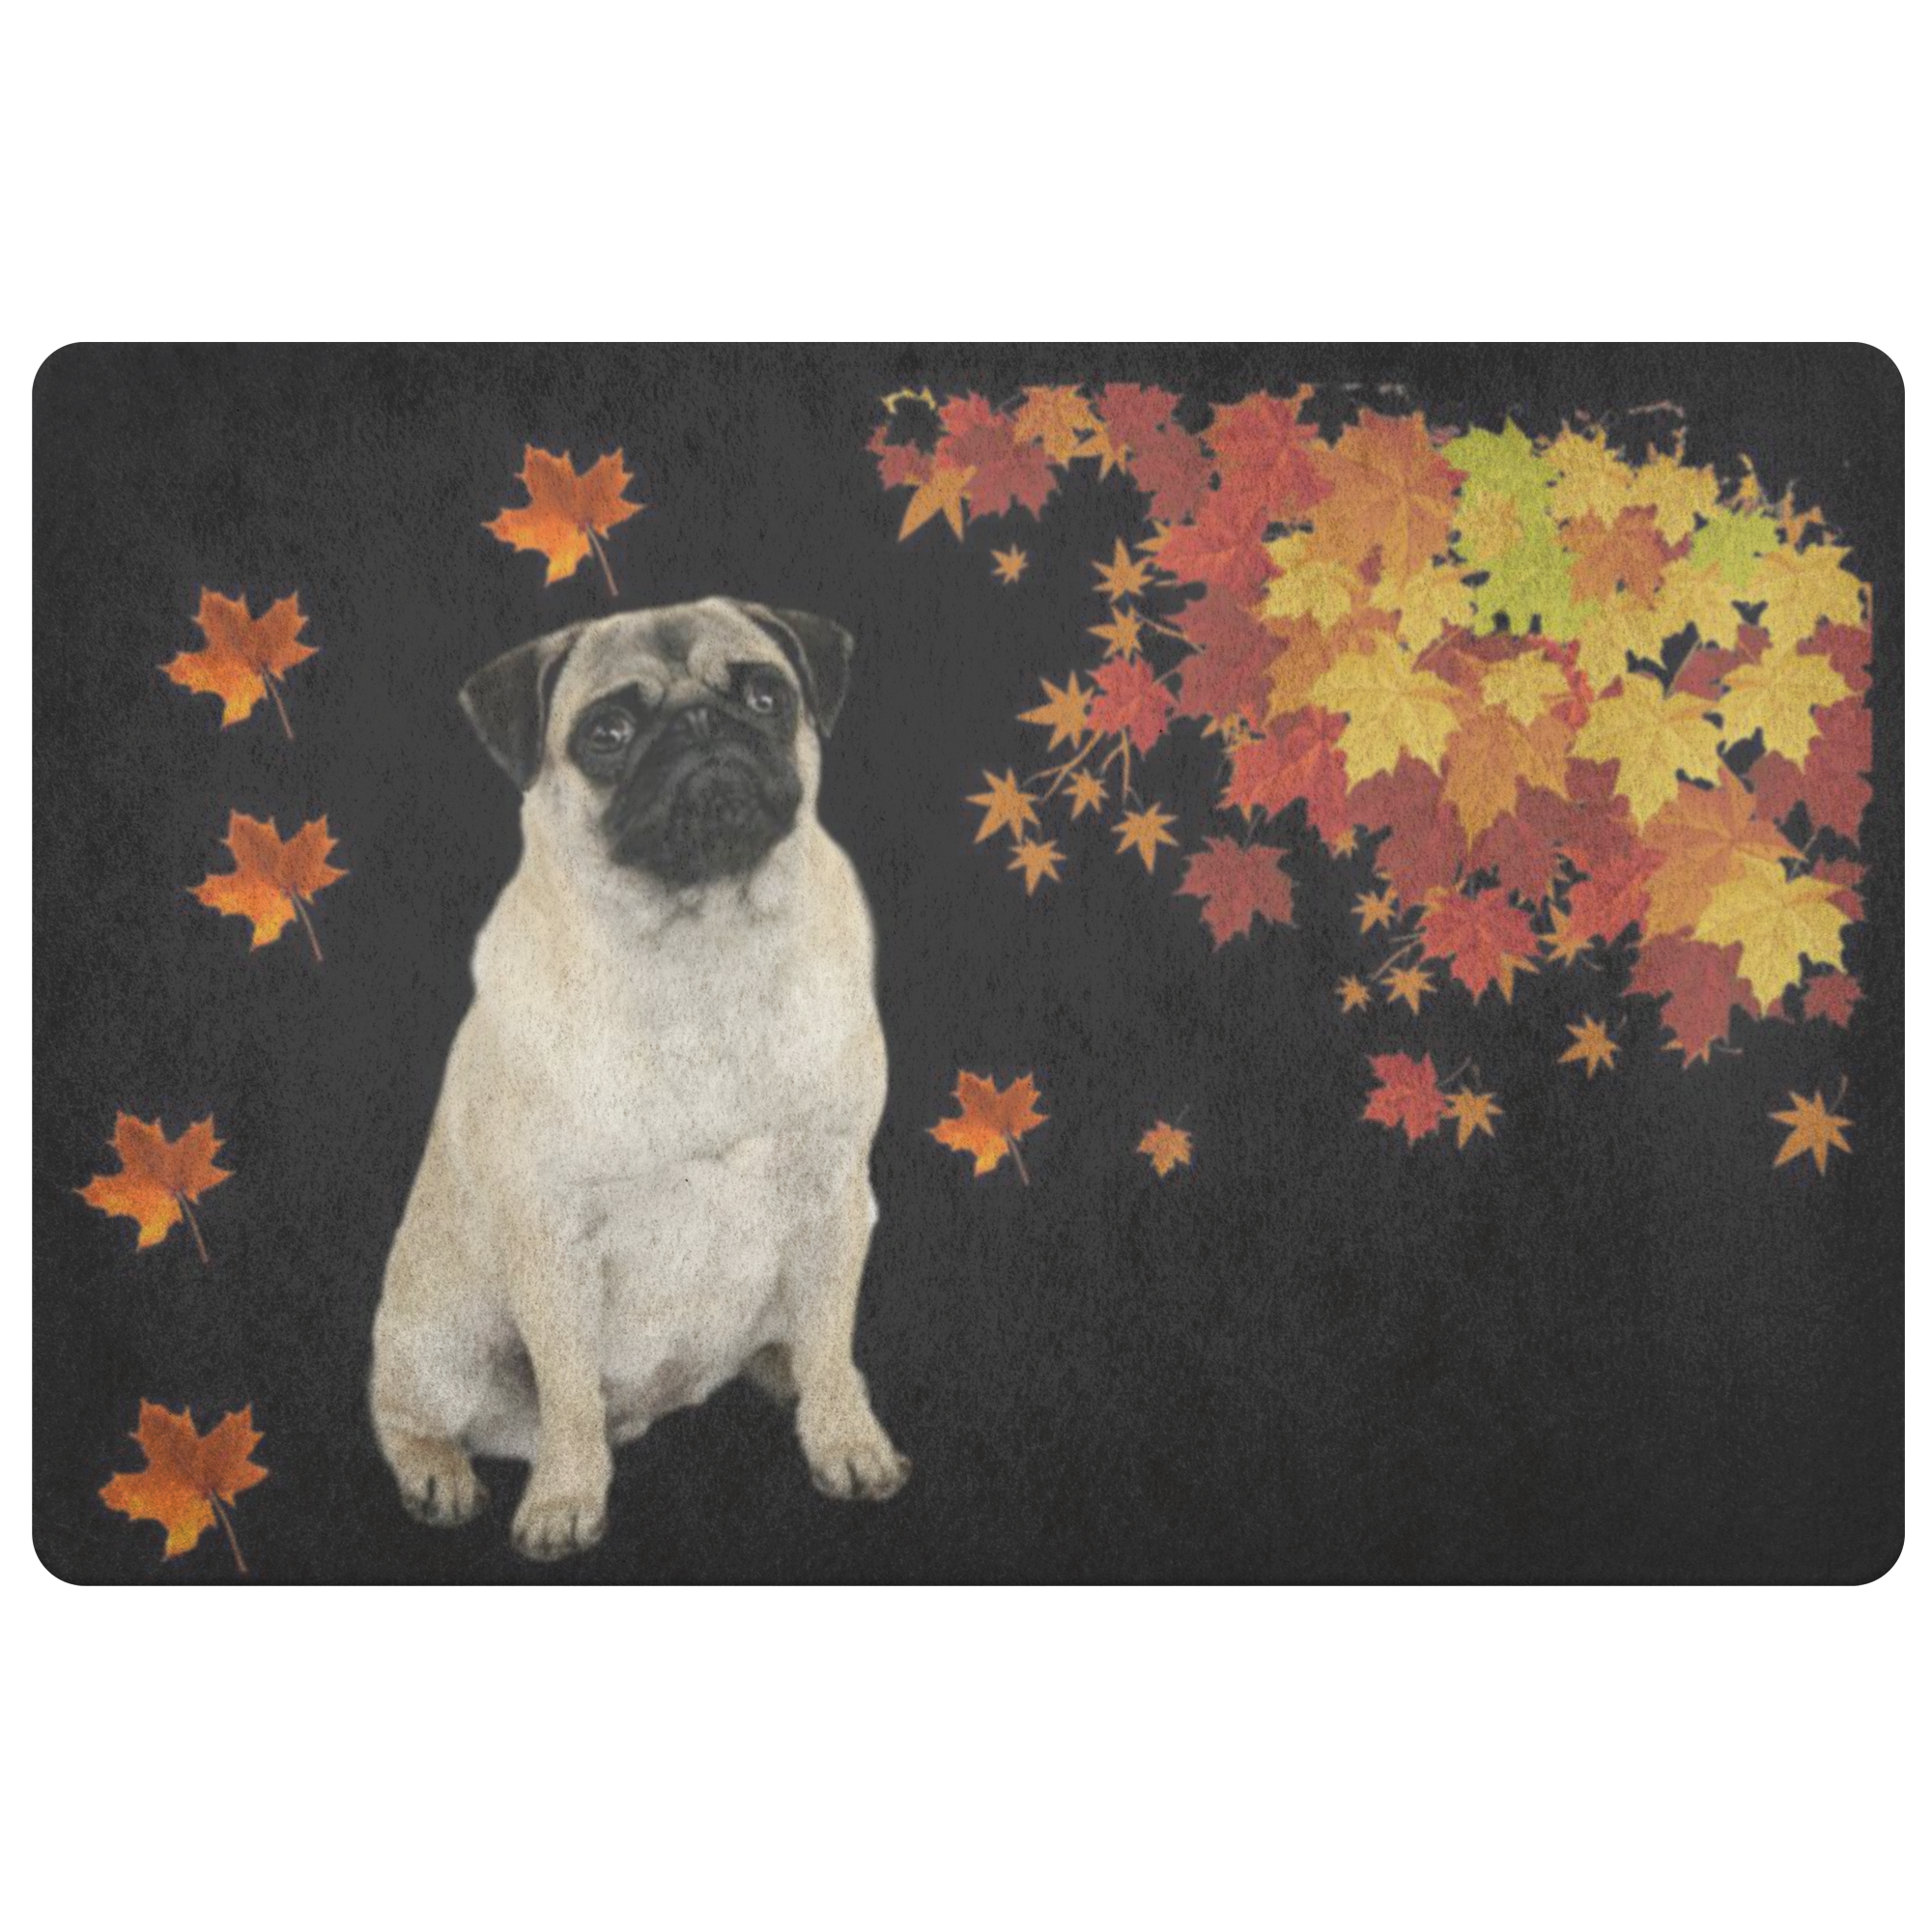 Pug Doormat -Fall